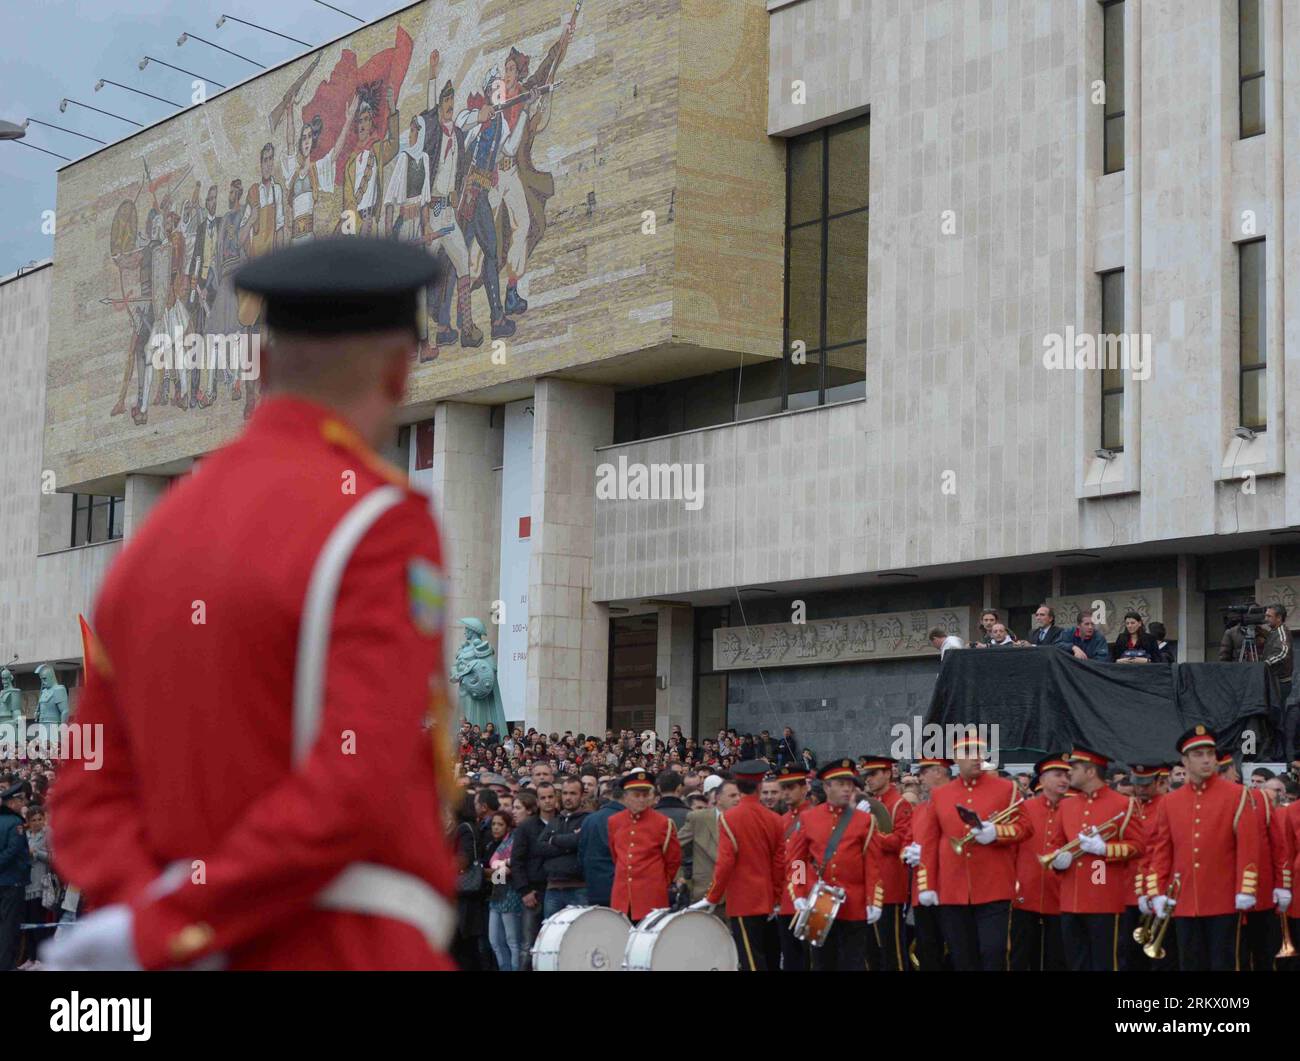 Bildnummer: 58850750  Datum: 28.11.2012  Copyright: imago/Xinhua (121129) -- TIRANA, Nov. 28, 2012 (Xinhua) -- Albanian take part in the celebration marking the country s 100th anniversary of independence, in Tirana, Albania, Nov. 28, 2012. (Xinhua/Gent Dodoveci) (rh) ALBANIA-TIRANA-INDIPENDENCE-ANNIVERSARY-CELEBRATION PUBLICATIONxNOTxINxCHN Gesellschaft Albanien Unabhaengigkeit Unabhaengigkeitstag Feiertag Jubilaeum xas x0x 2012 quer premiumd     58850750 Date 28 11 2012 Copyright Imago XINHUA  Tirana Nov 28 2012 XINHUA  Take Part in The Celebration marking The Country S 100th Anniversary of Stock Photo